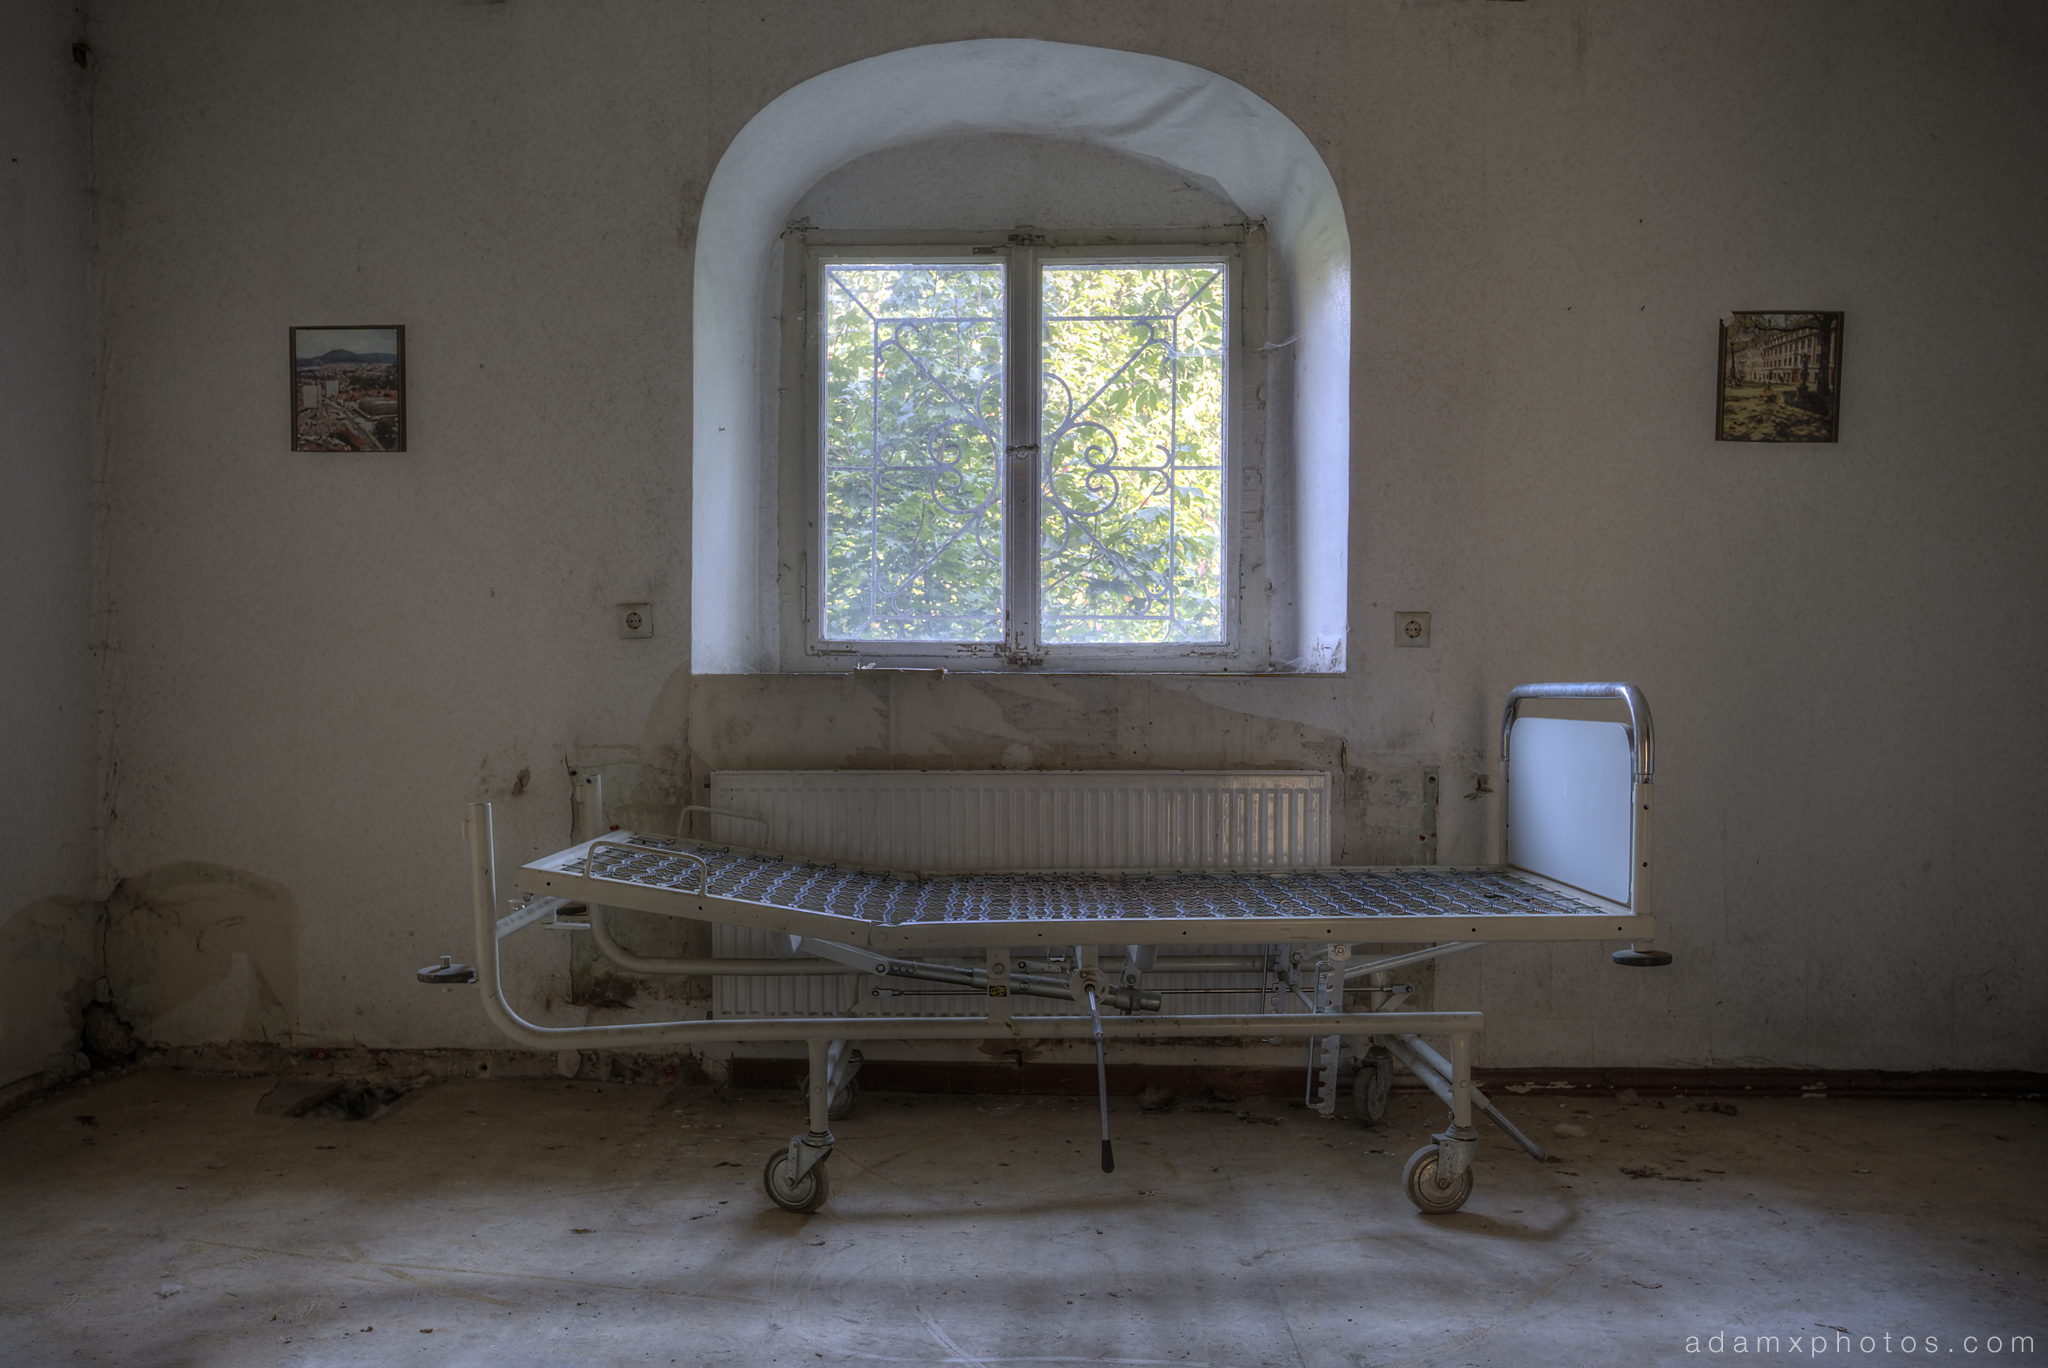 Adam X Urbex Krankenhaus von rollstuhlen Hospital of wheelchairs Germany Urban Exploration Decay Lost Abandoned Hidden Wheelchair bed window